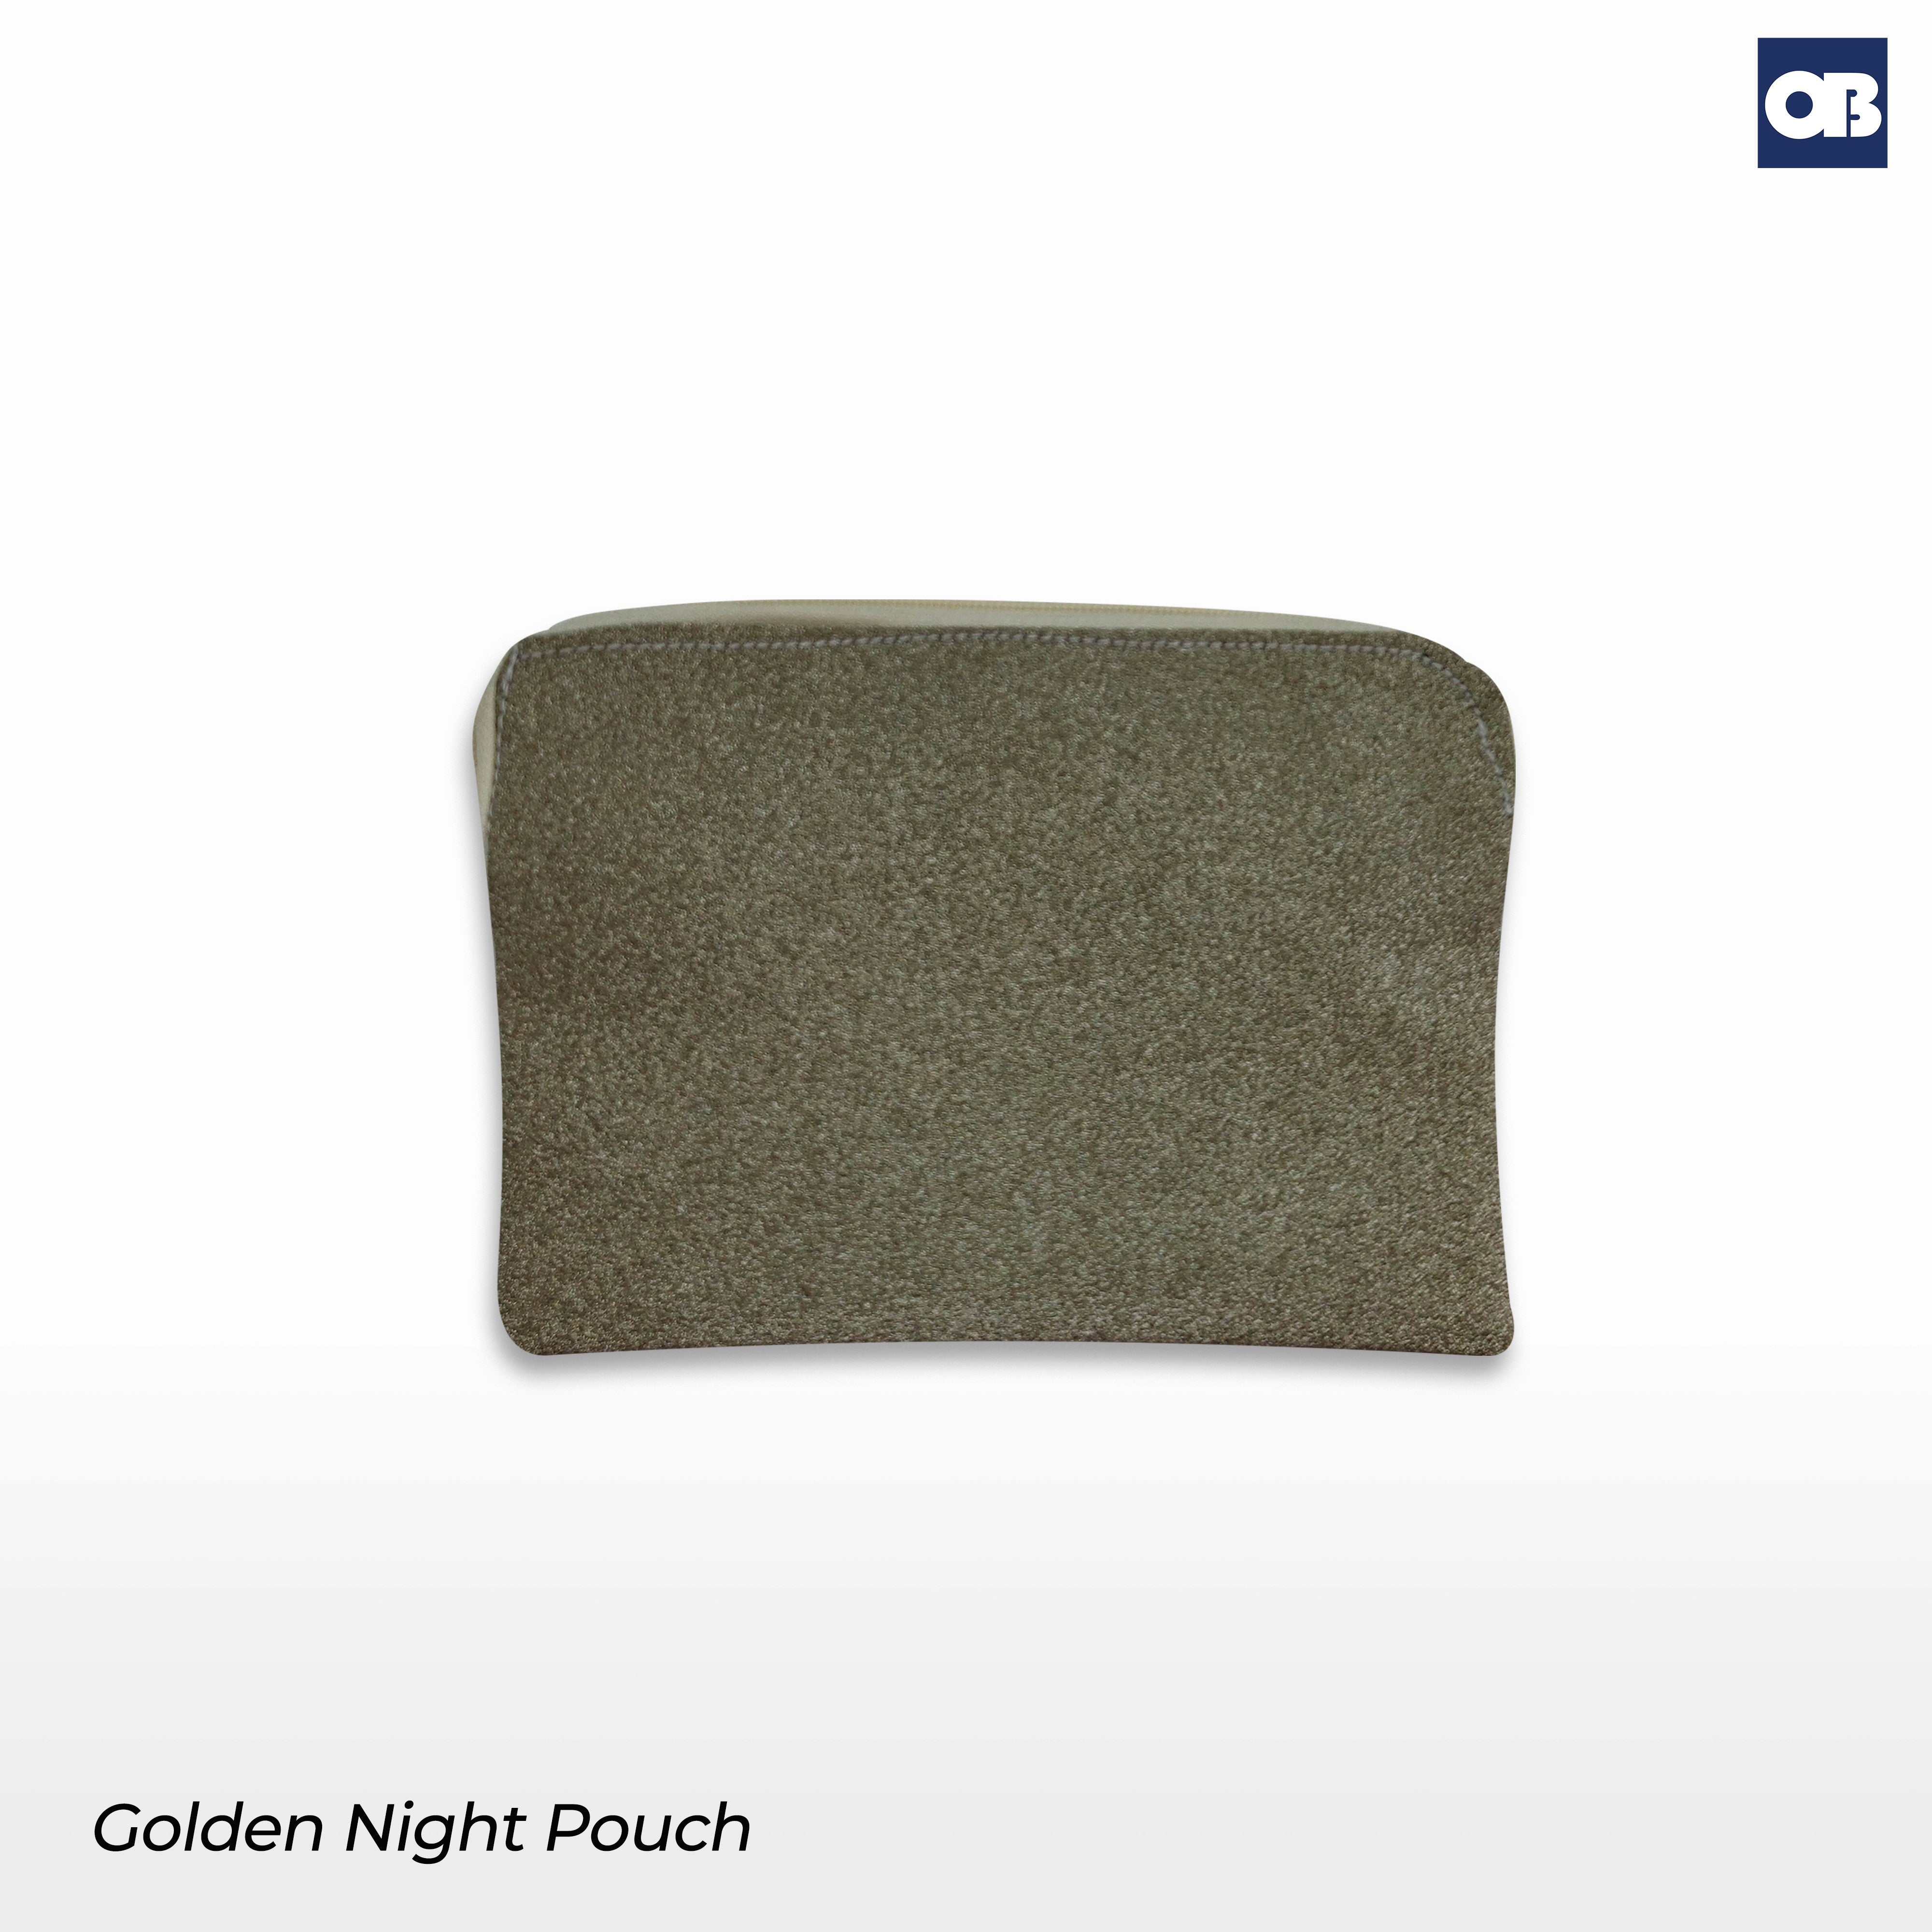 OB Golden Night Pouch